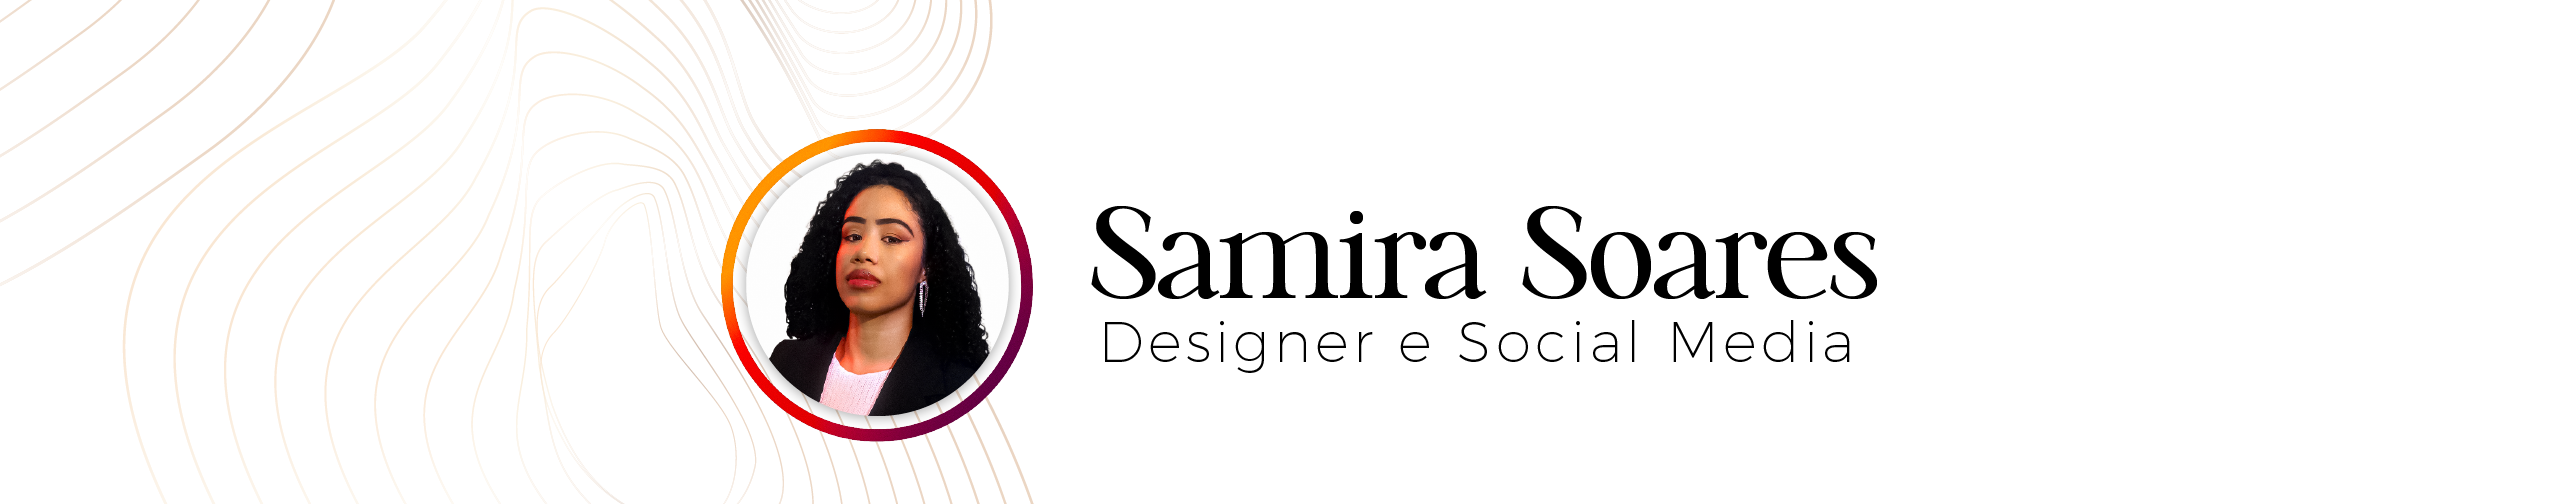 Samira Soares's profile banner